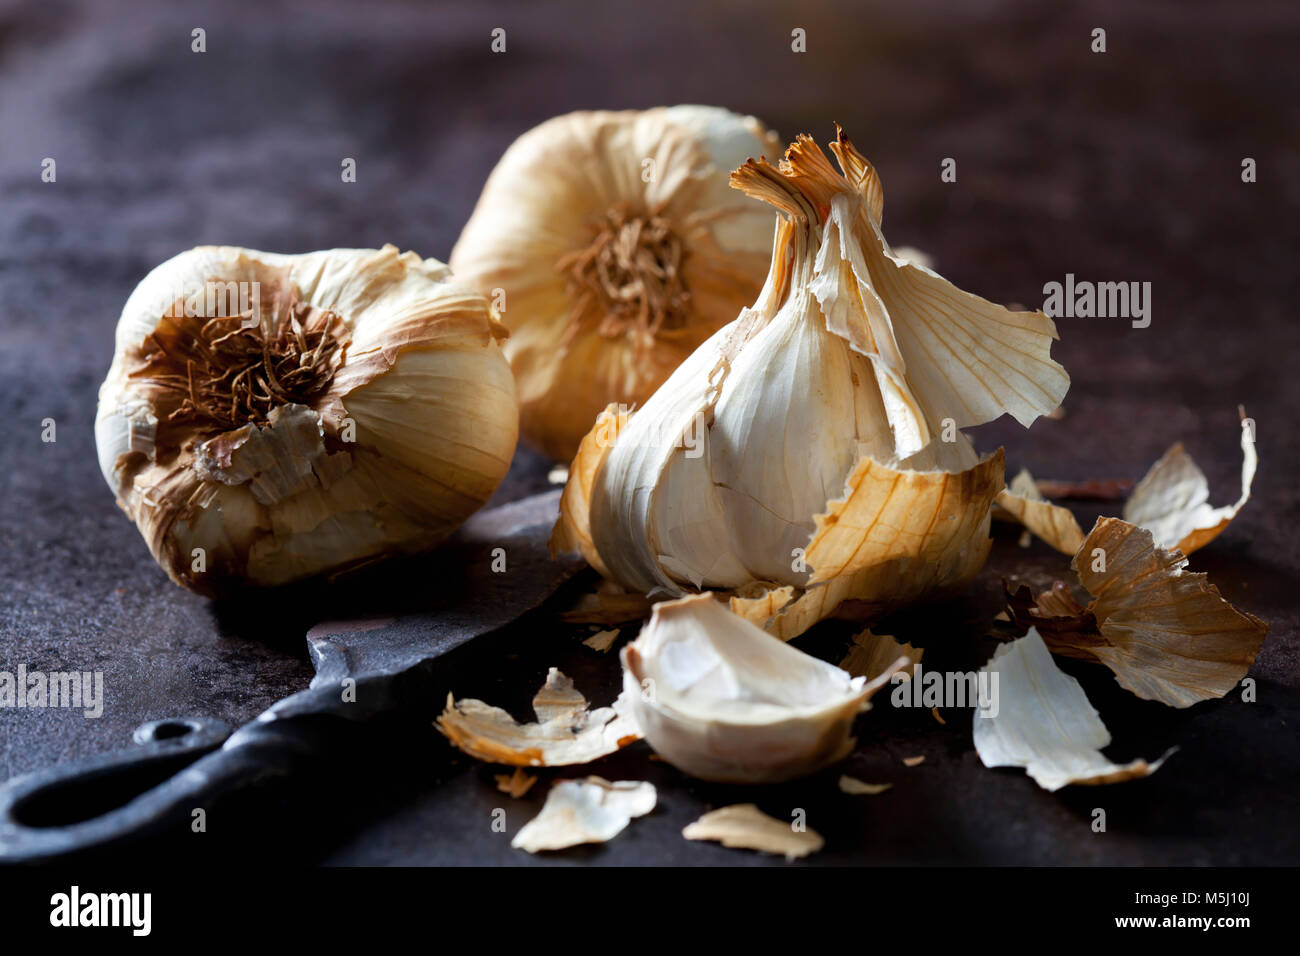 Smoked garlic on rusty ground Stock Photo